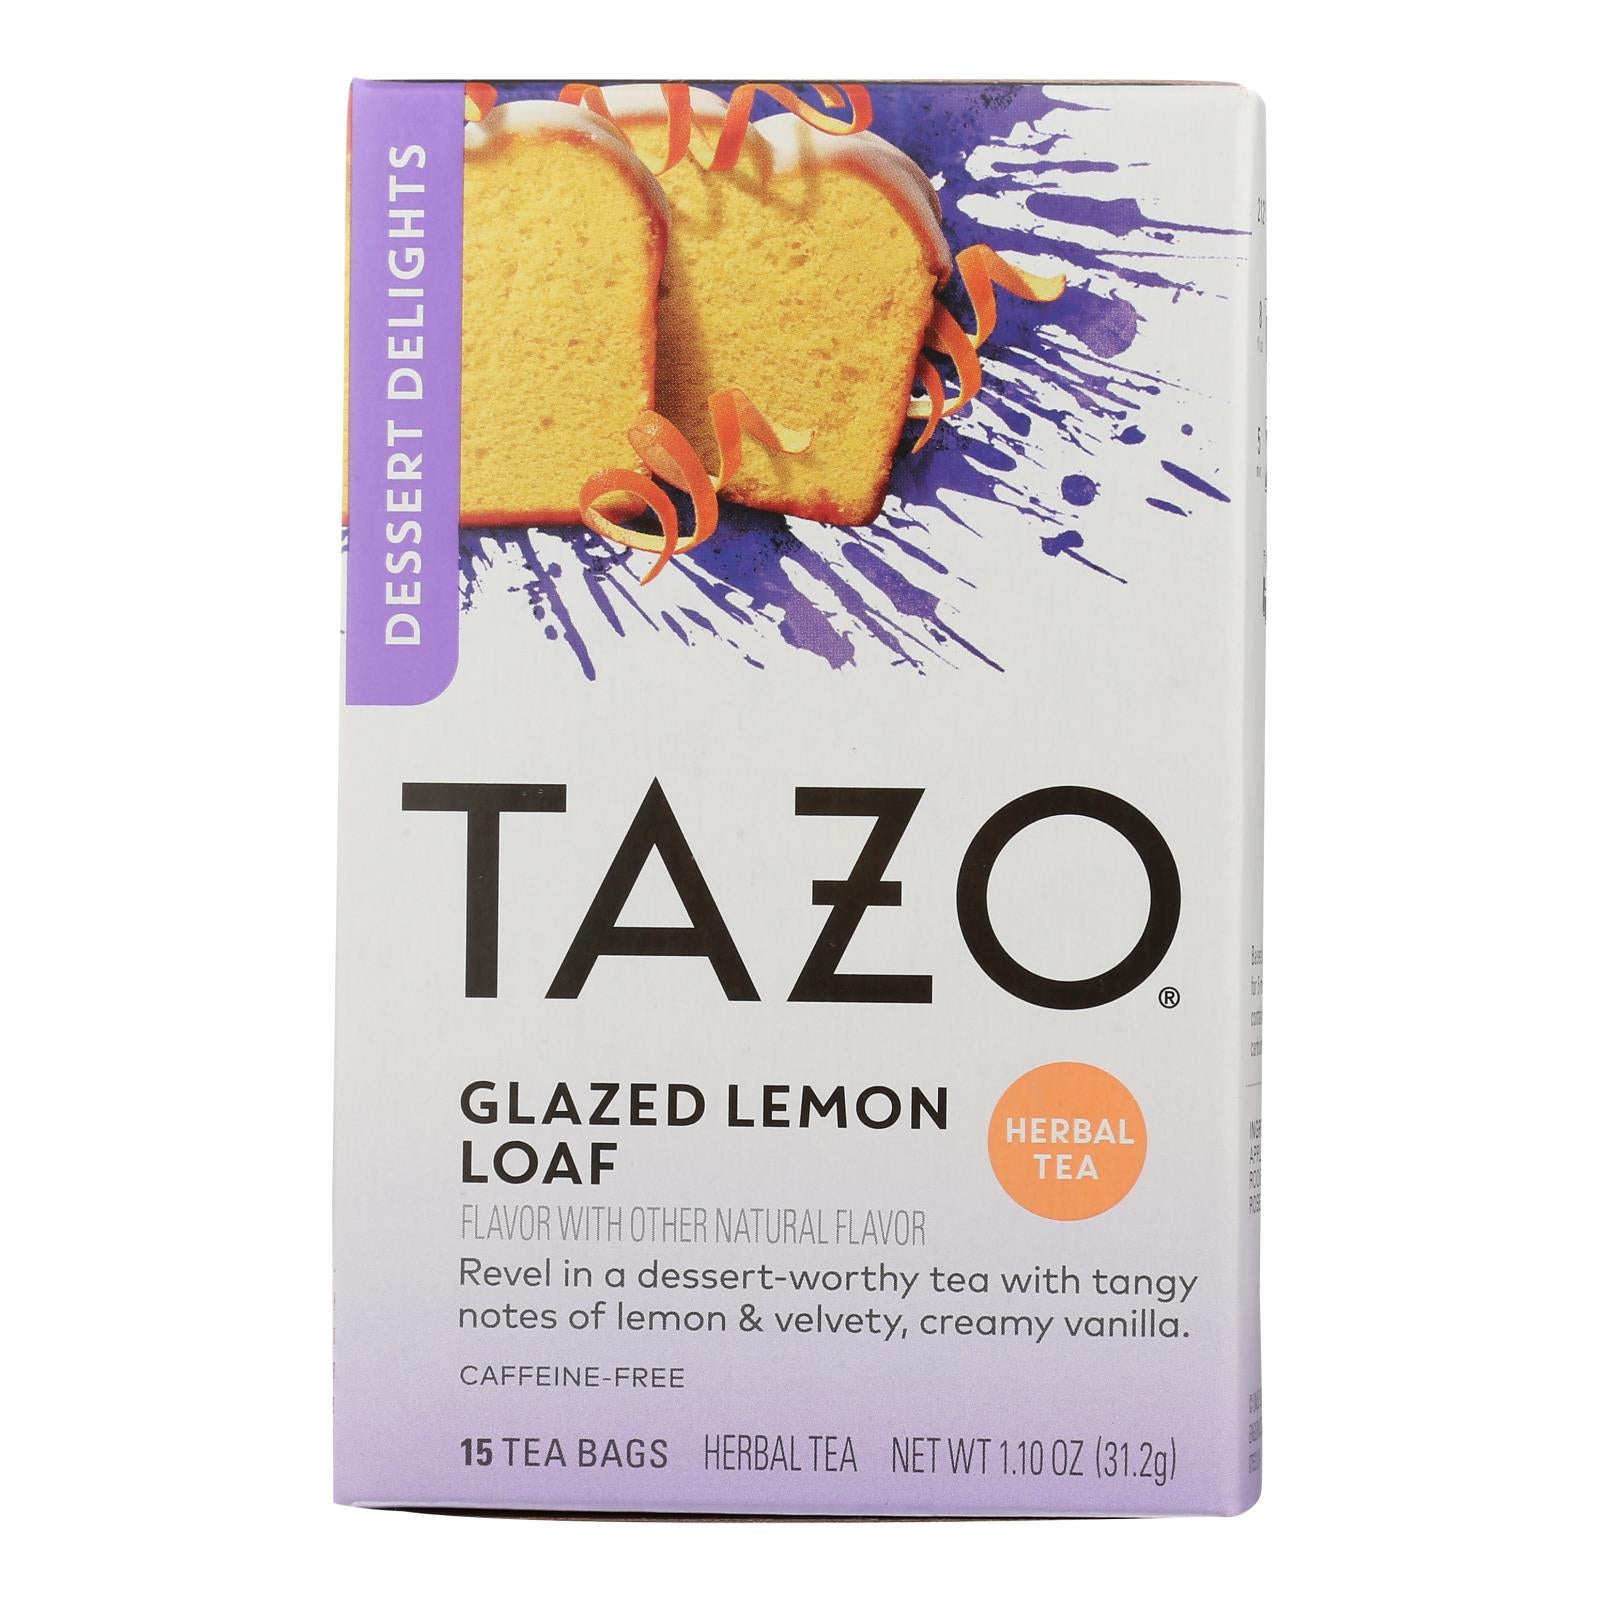 Tazo Tea - Tea Hrbl Glzd Lemon Loaf - Case of 6 - 15 BAG